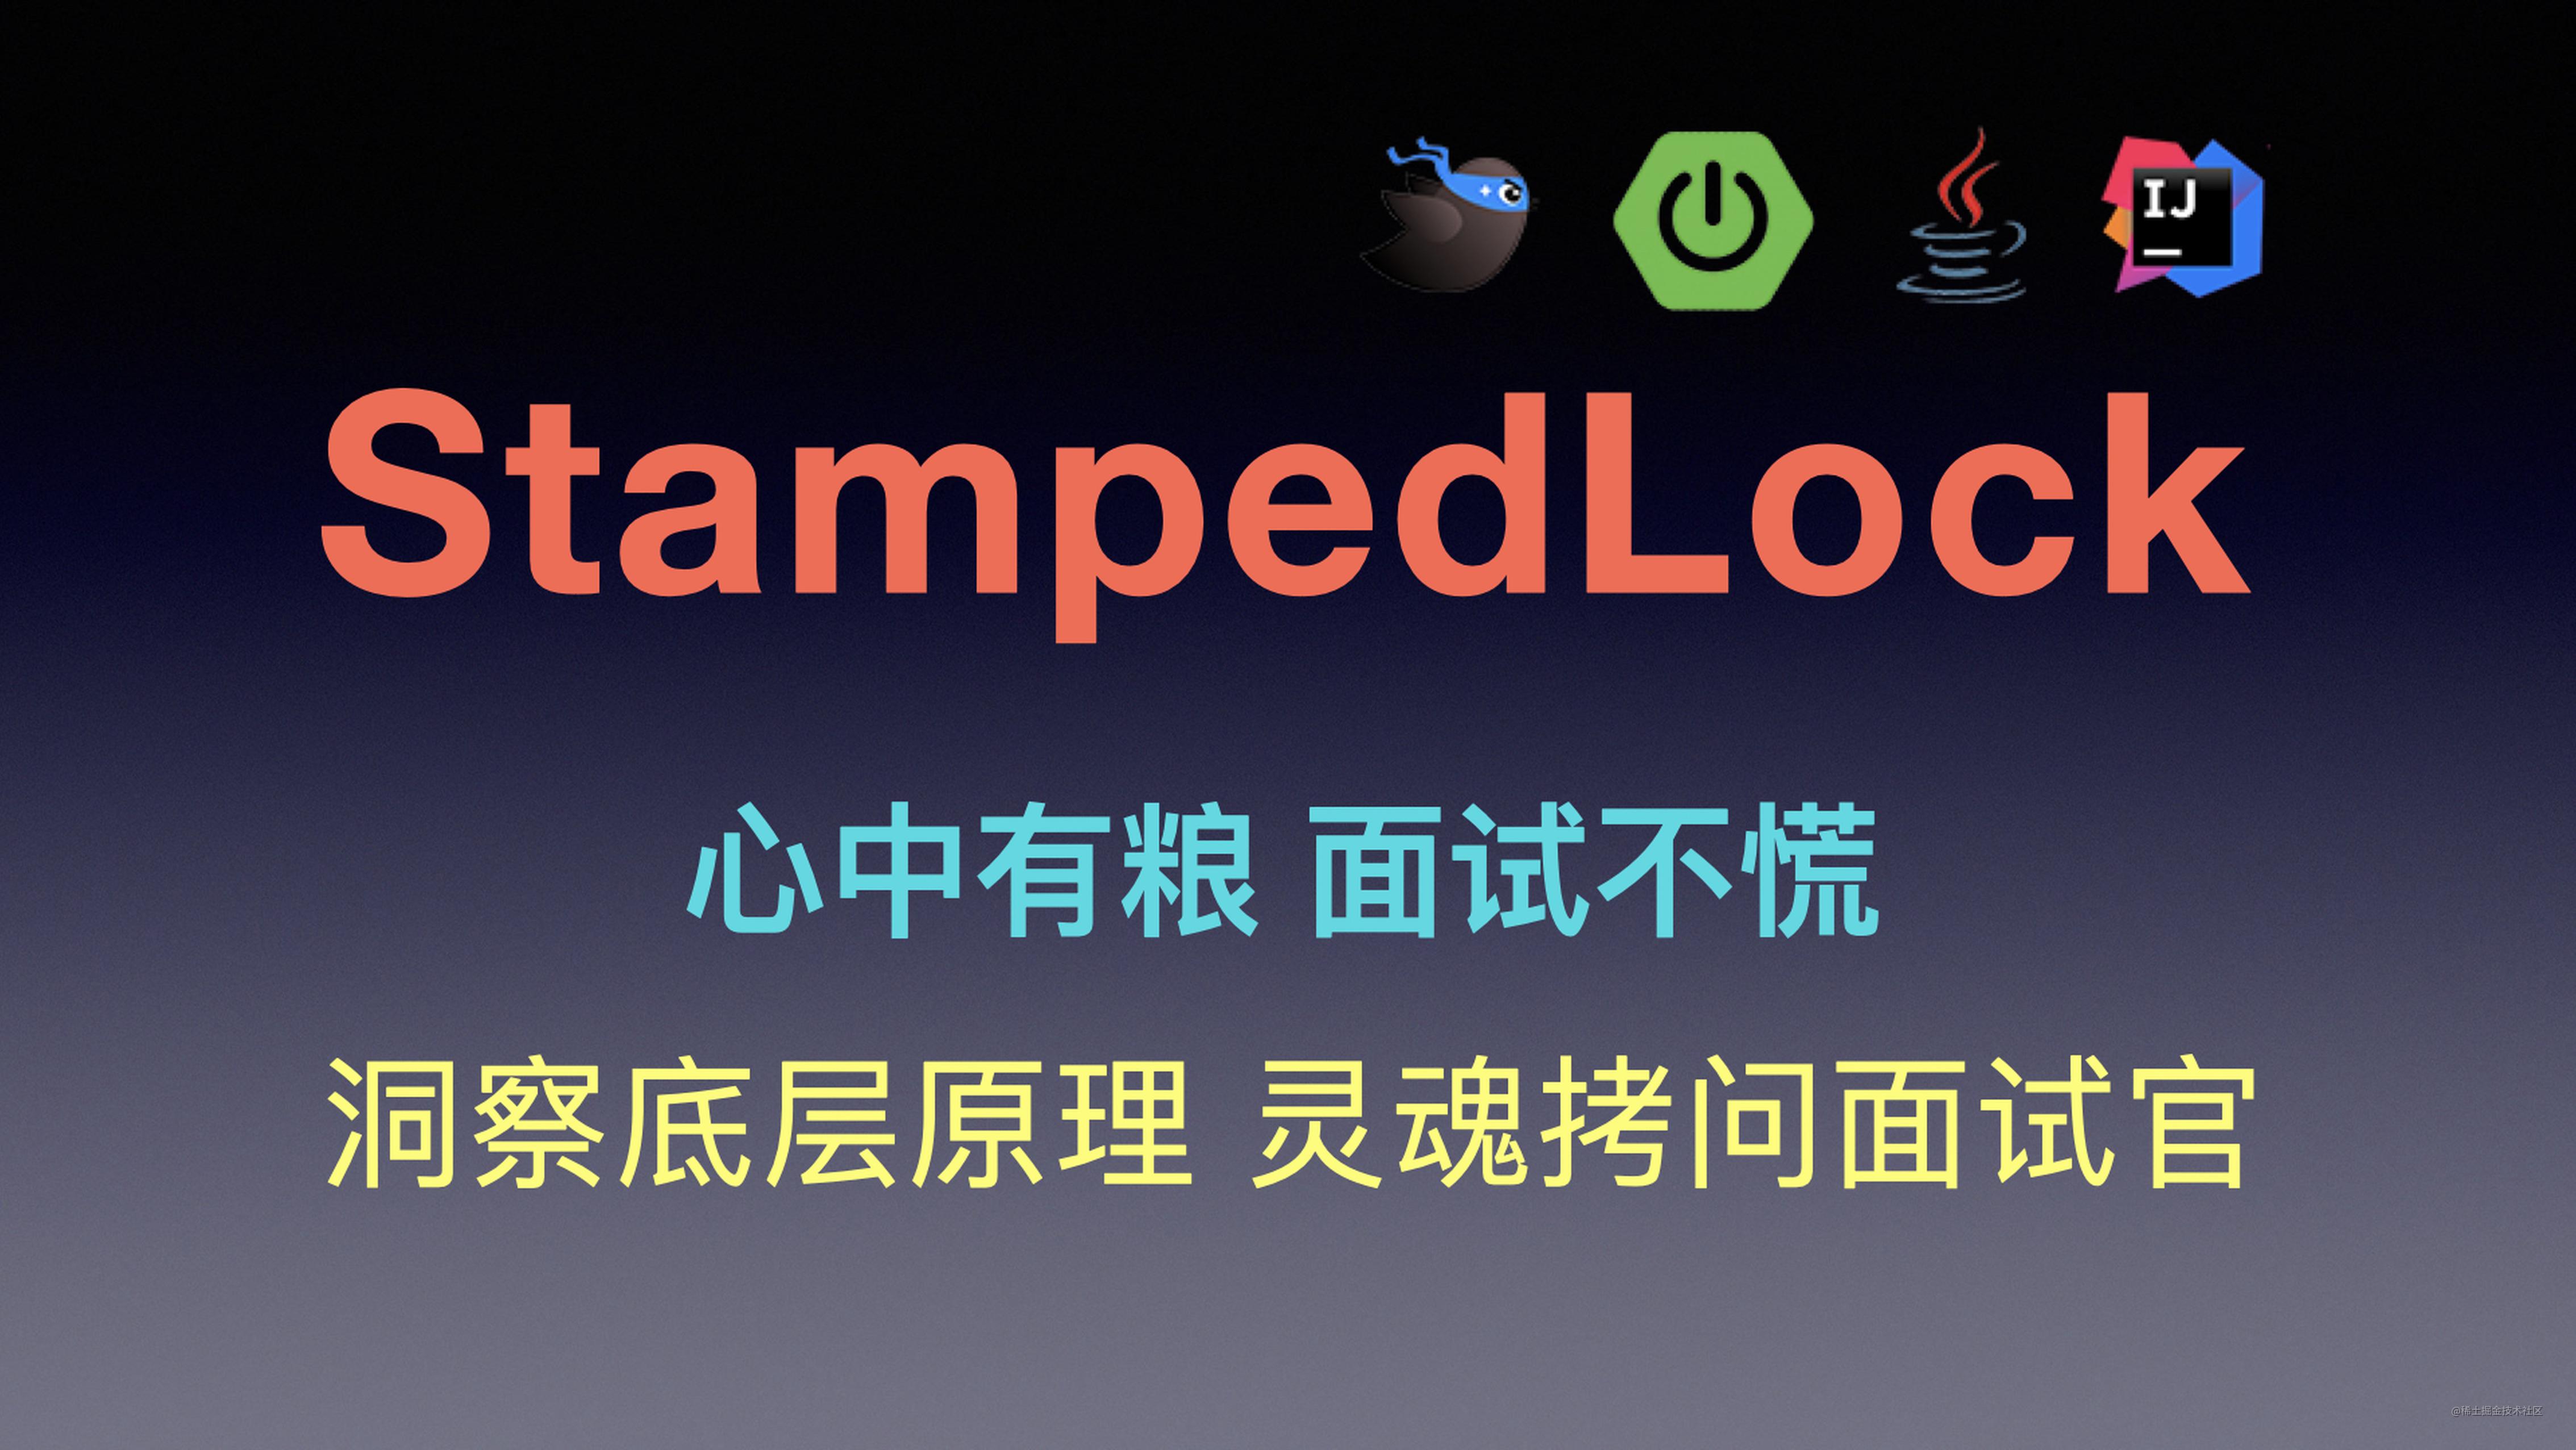 StampedLock读写锁性能之王